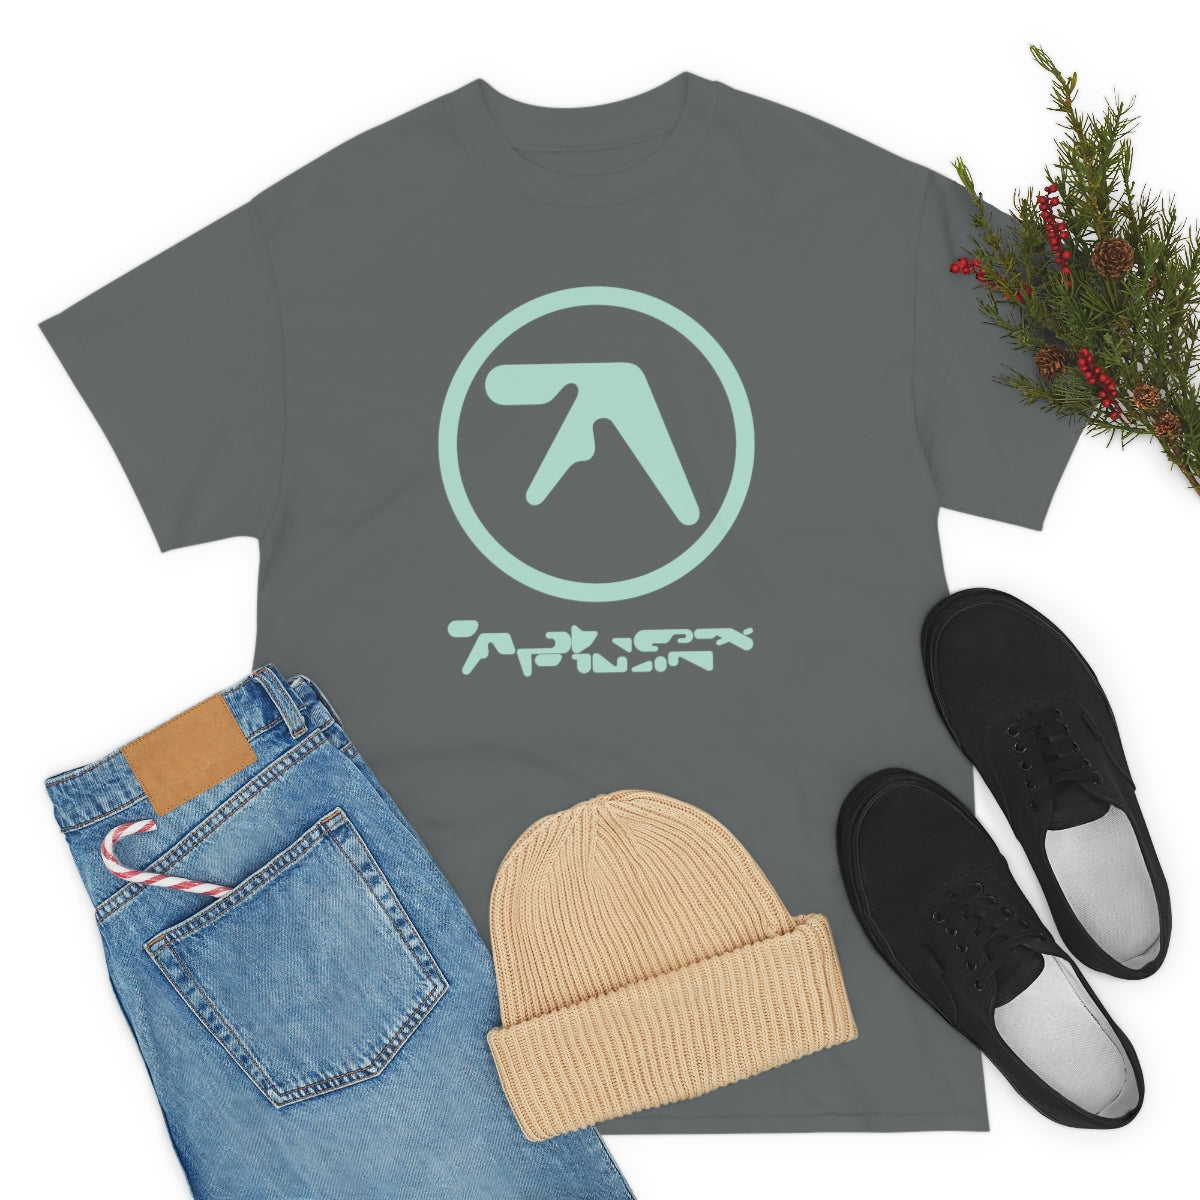 Aphex Twin Vintage Vibe Logo T-shirt (Mint)